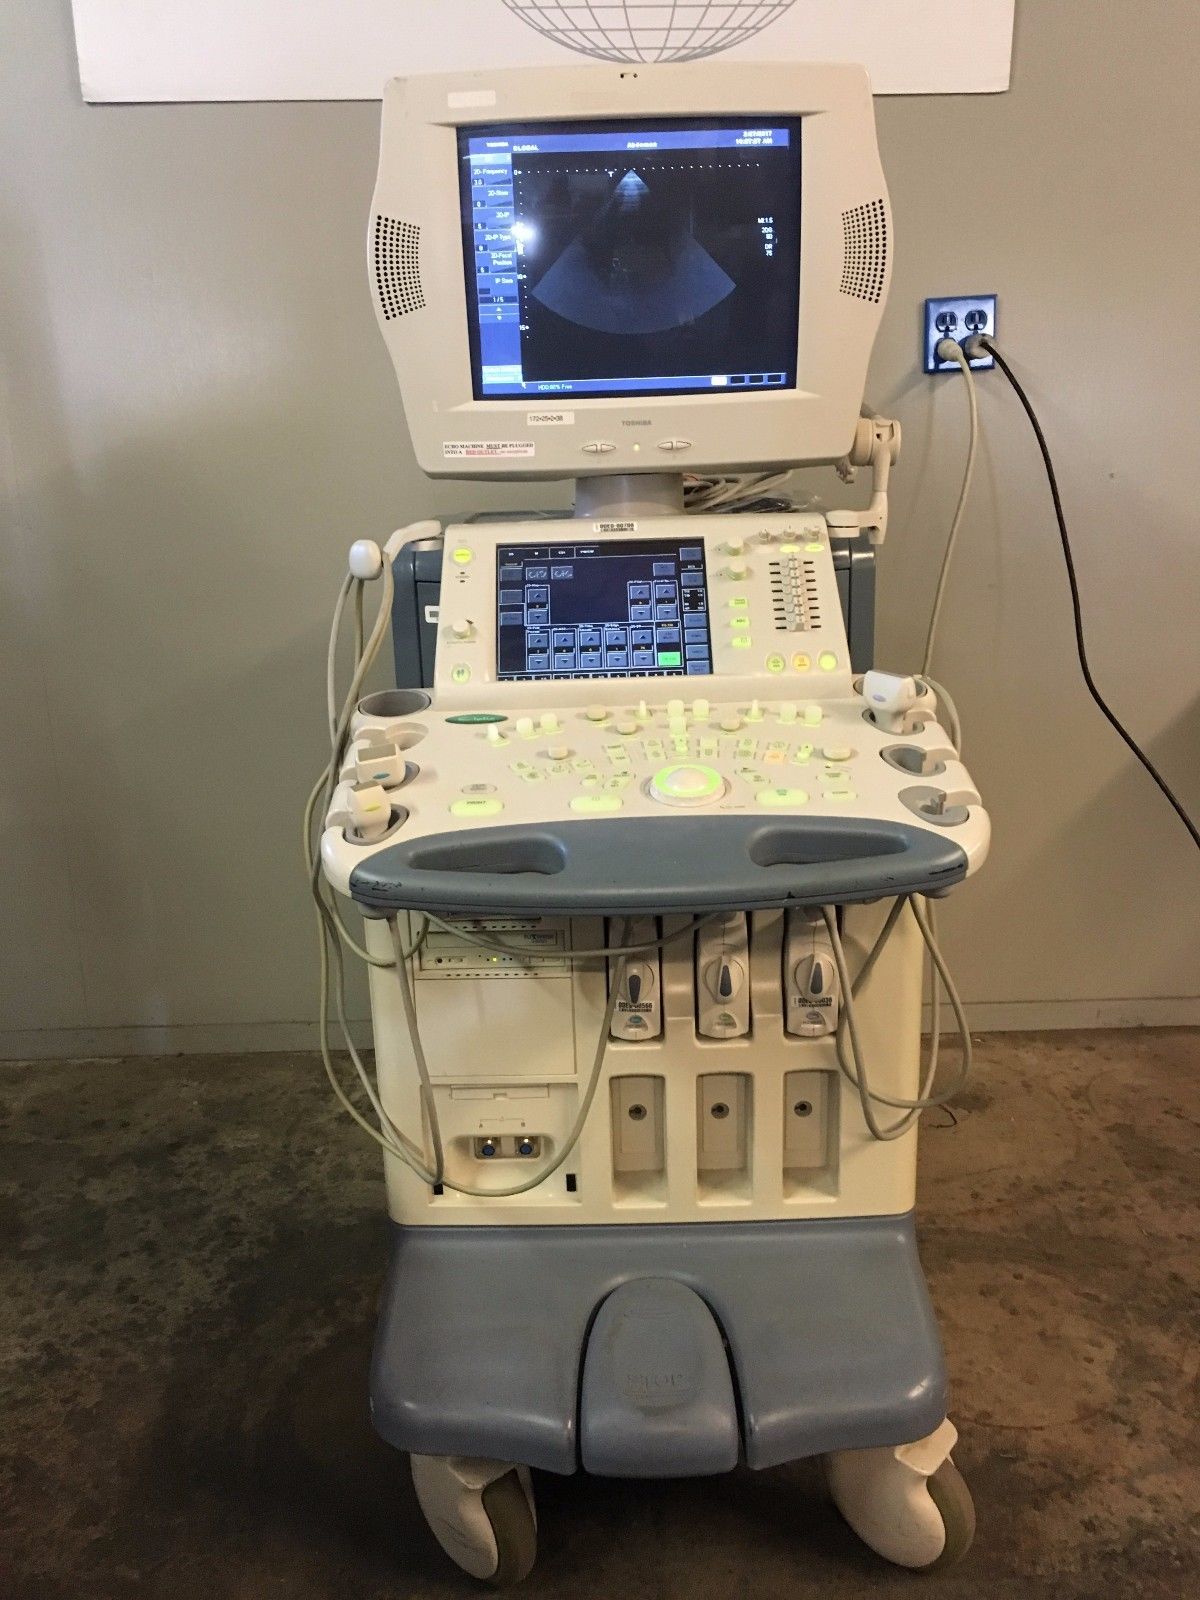 Toshiba Aplio 80 Ultrasound System w/ PST-20CT, PLT-1204AT DIAGNOSTIC ULTRASOUND MACHINES FOR SALE